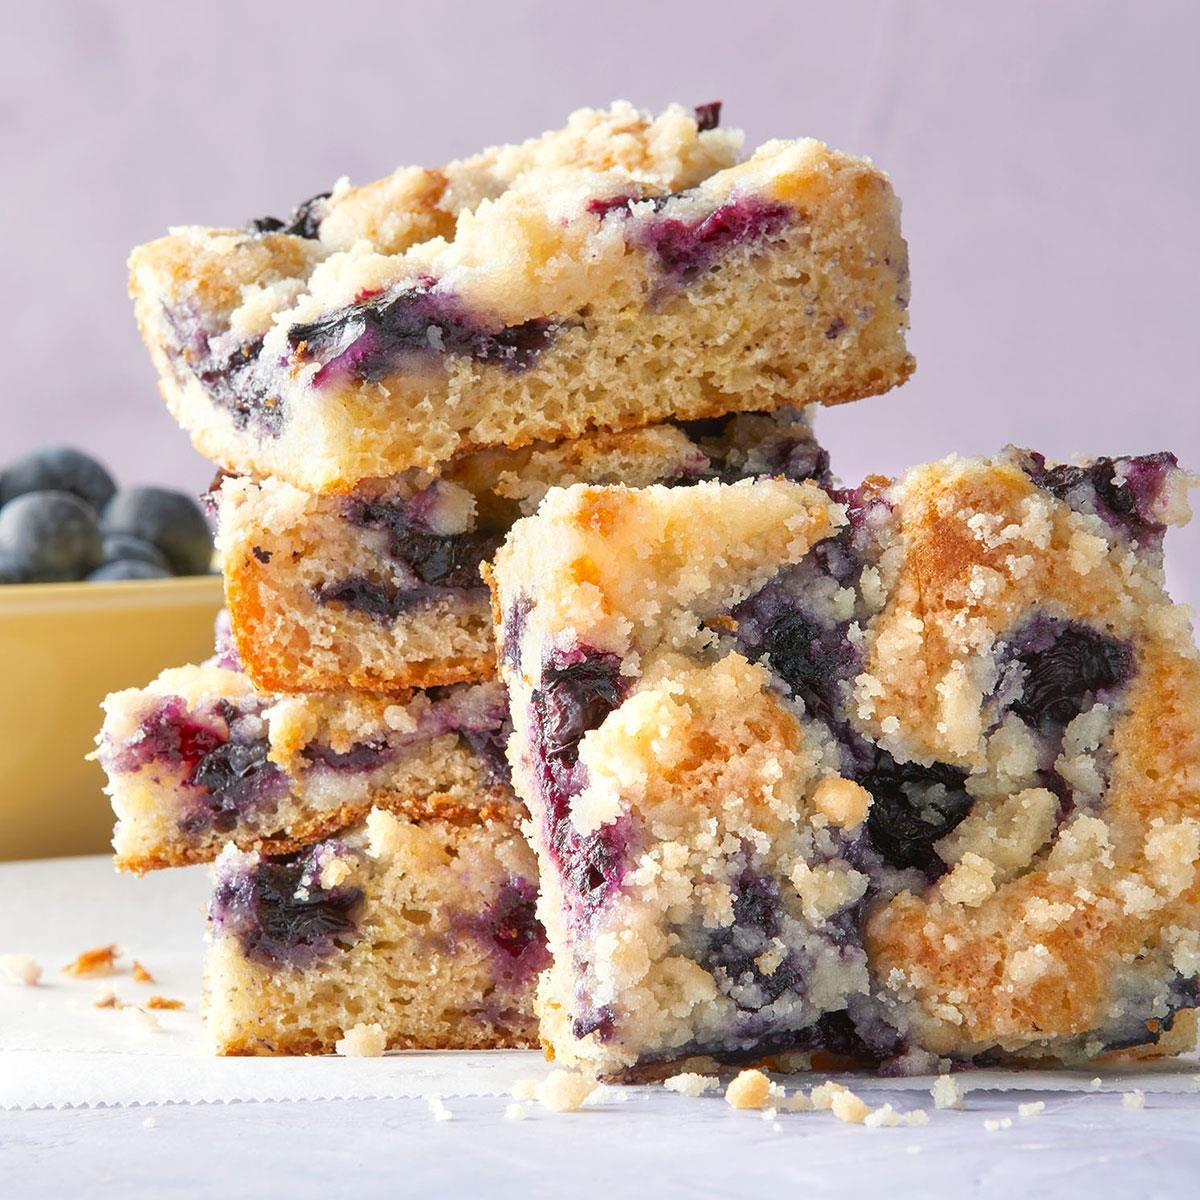 Blueberry Kuchen Recipe: How to Make It